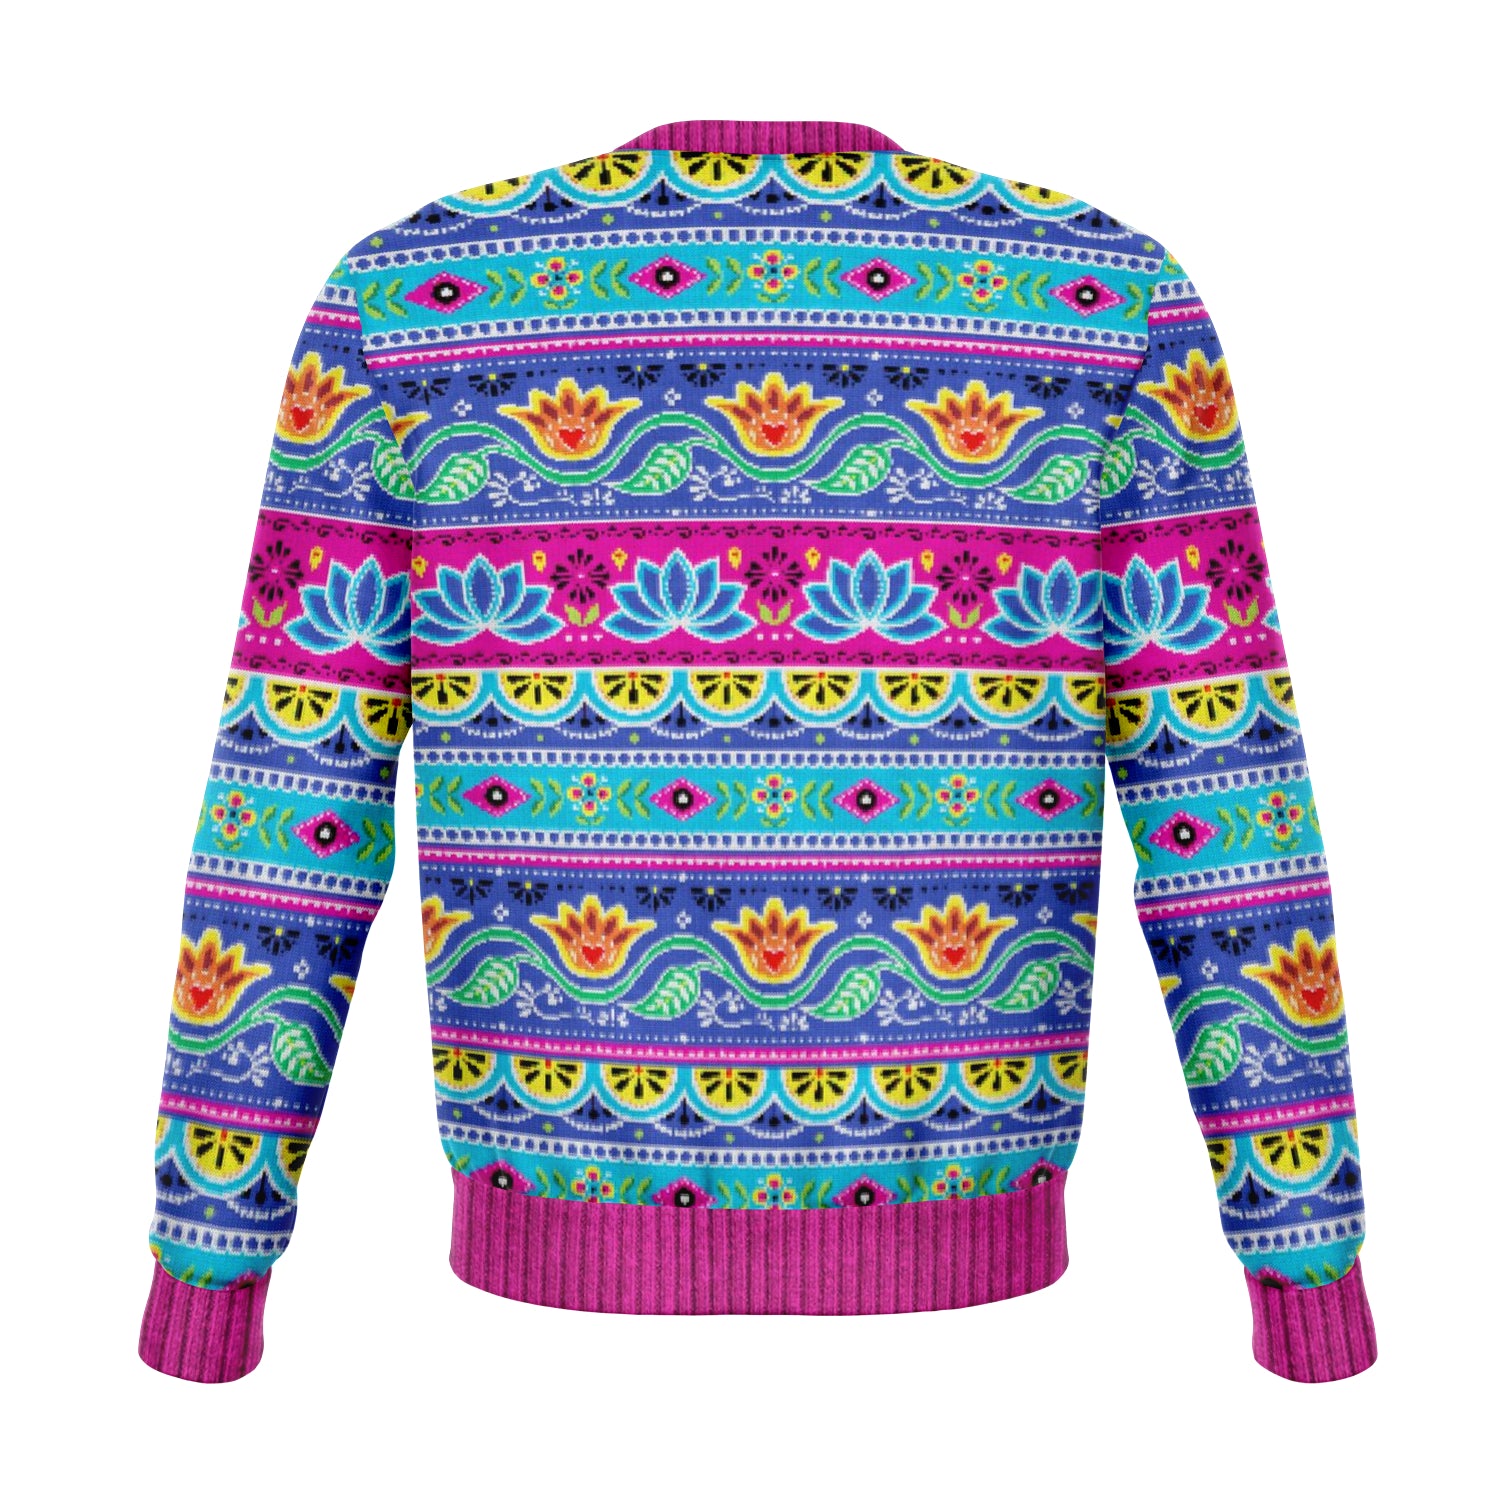 I'll Be Om for Christmas Sweatshirt | Unisex Ugly Christmas Sweater, Xmas Sweater, Holiday Sweater, Festive Sweater, Funny Sweater, Funny Party Shirt